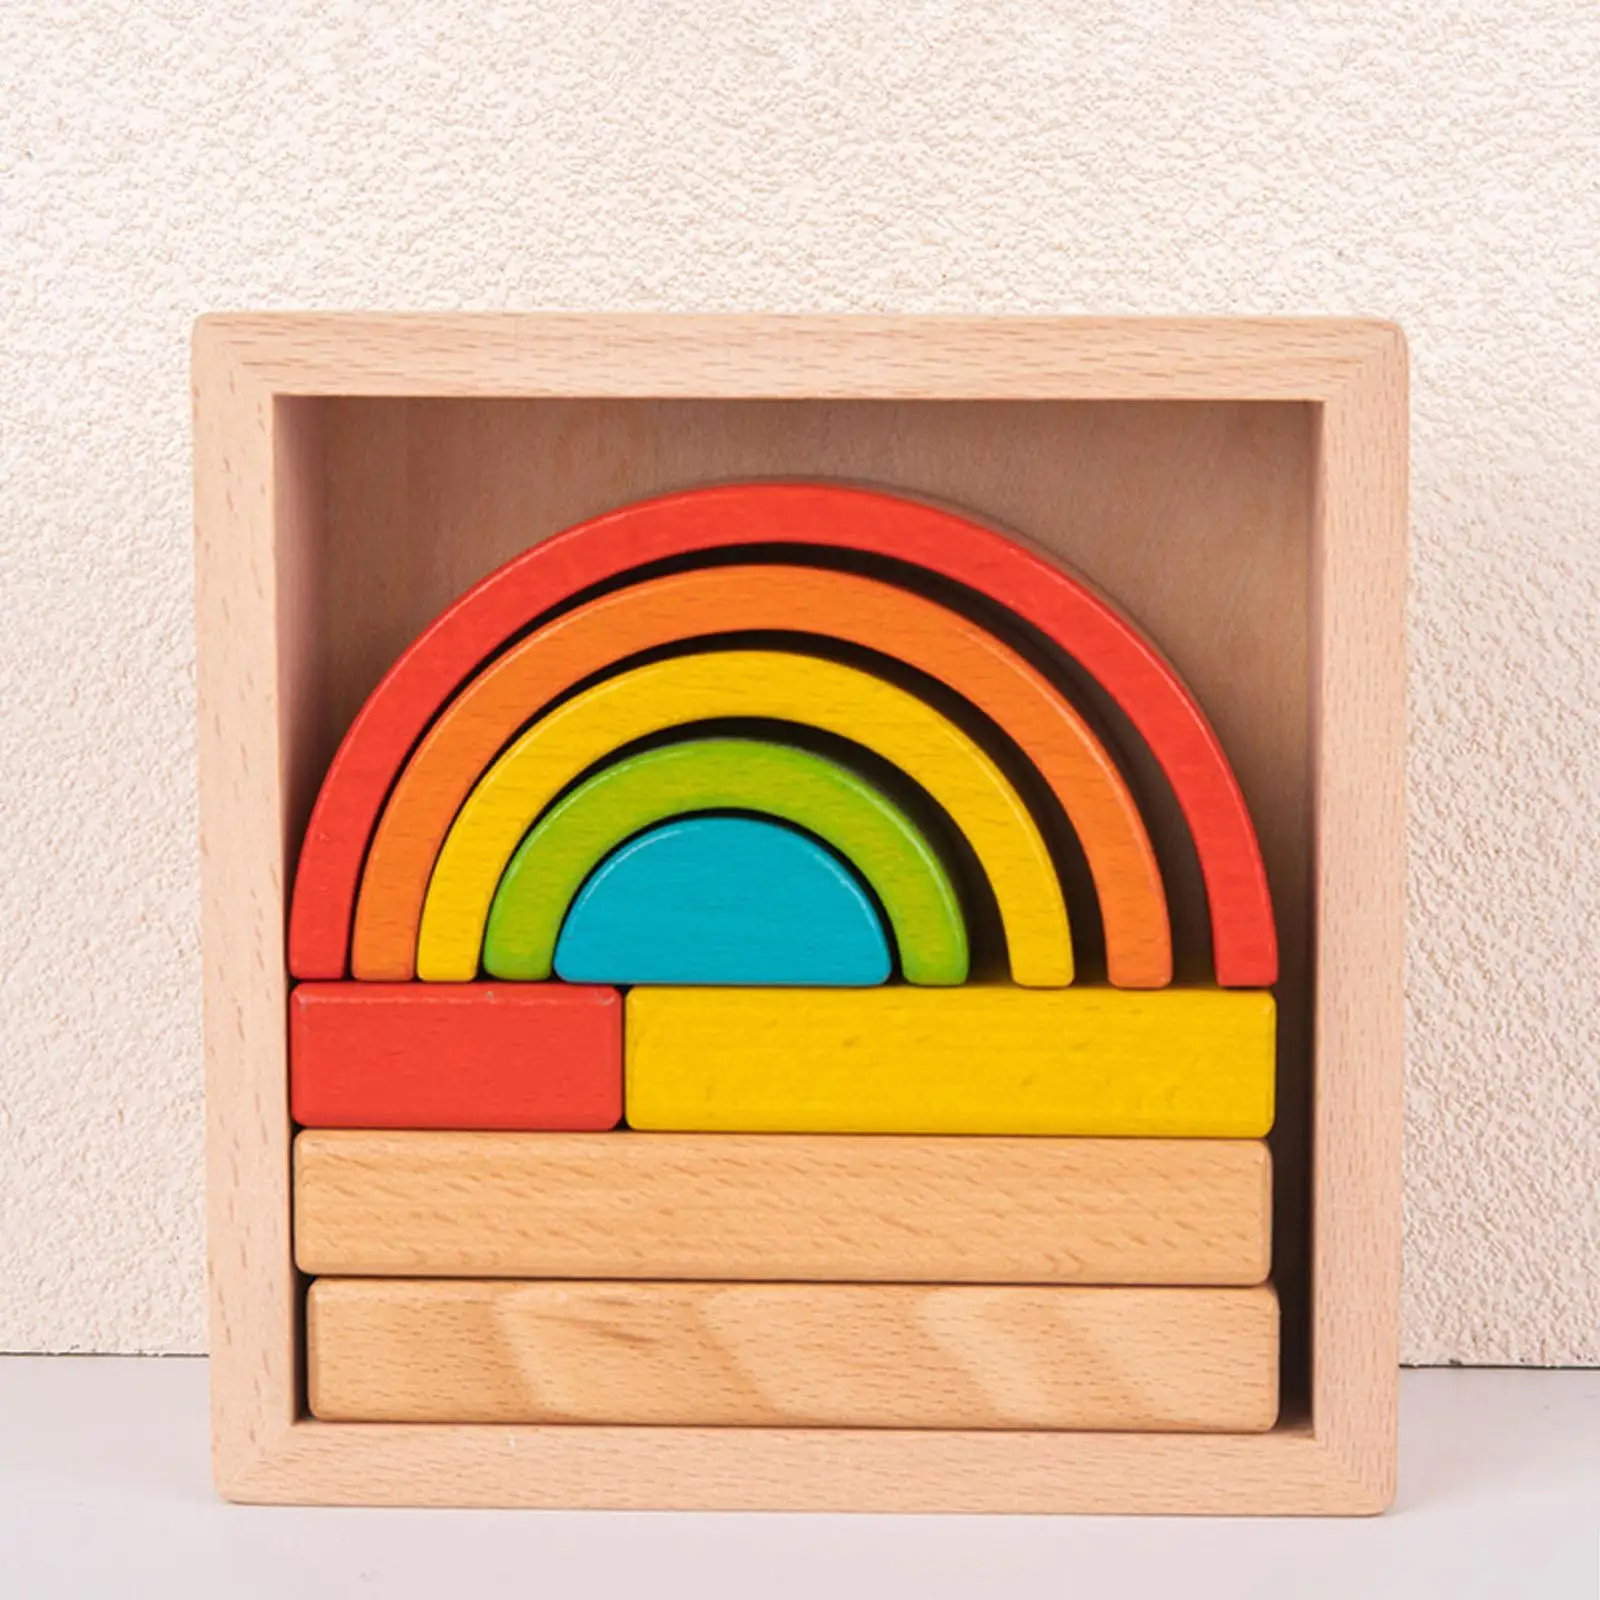 Wooden Stacker Nesting Puzzle Blocks Montessori Stacking Game for Preschool Boys Girls